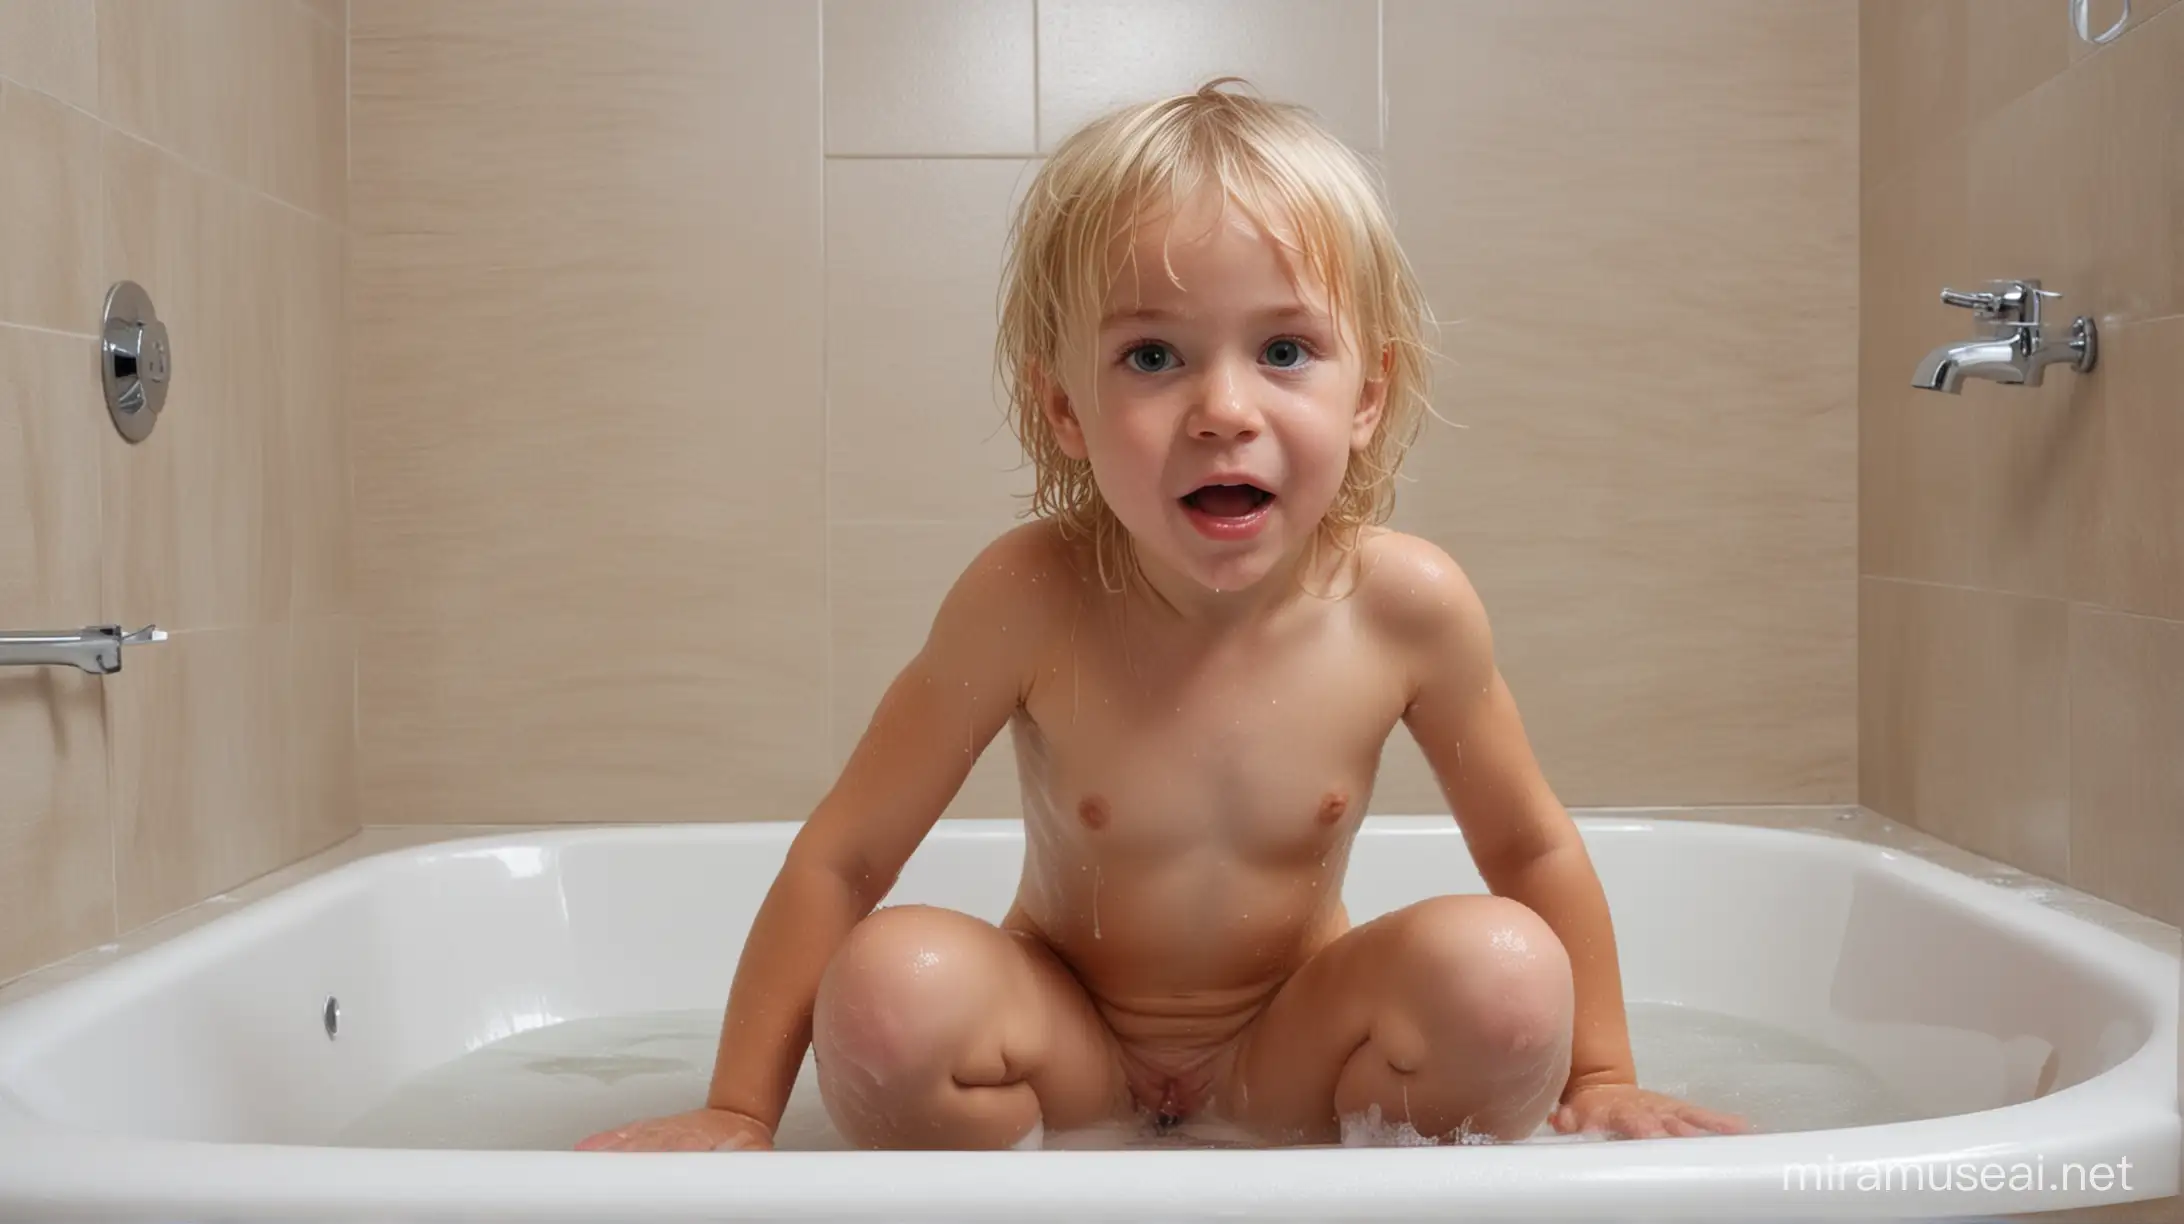 Adorable Blonde Child Enjoying a Refreshing Bubble Bath